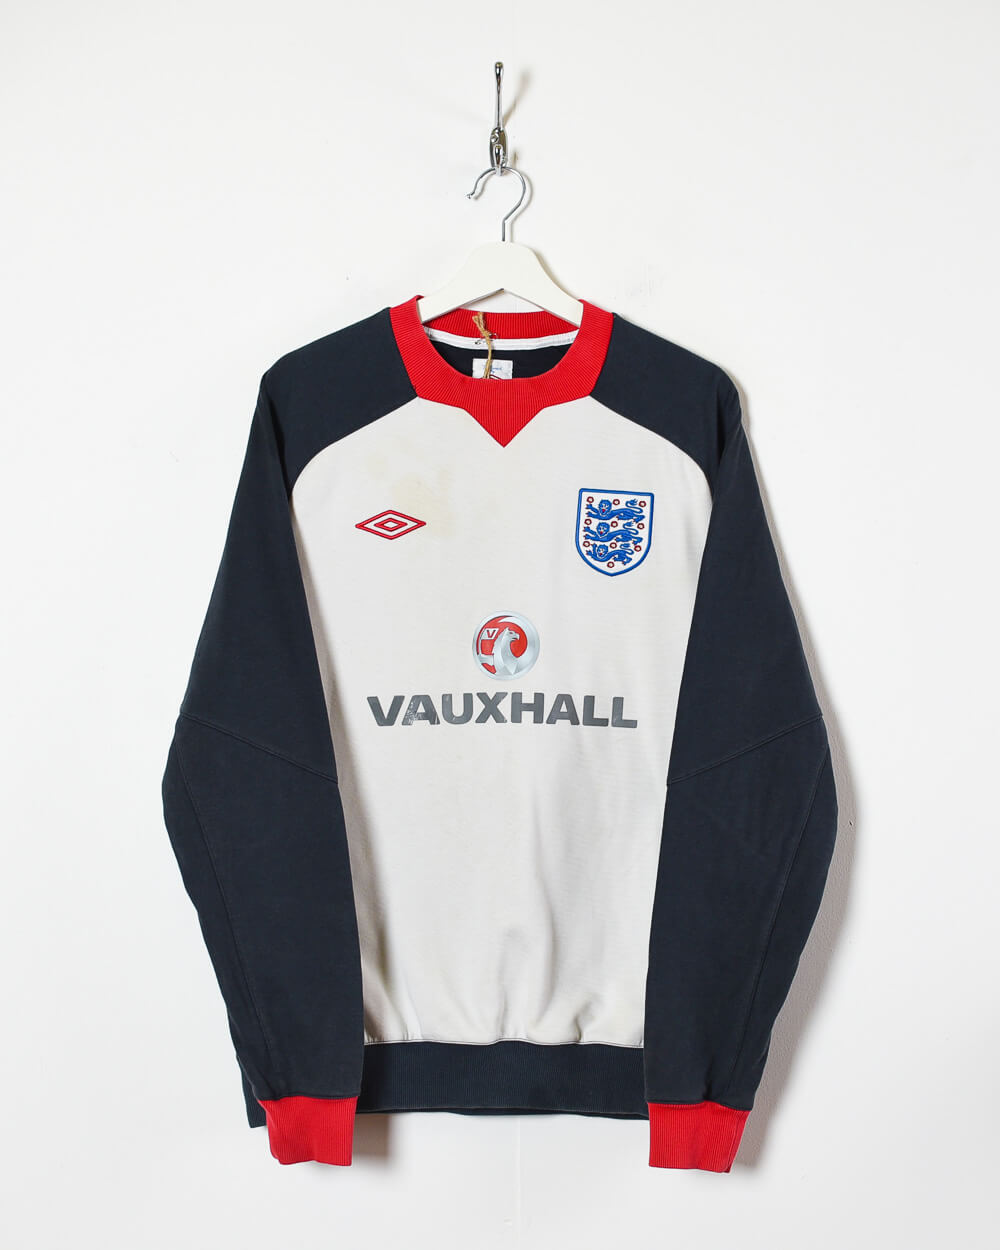 White Umbro England Vauxhall Football Sweatshirt - Medium